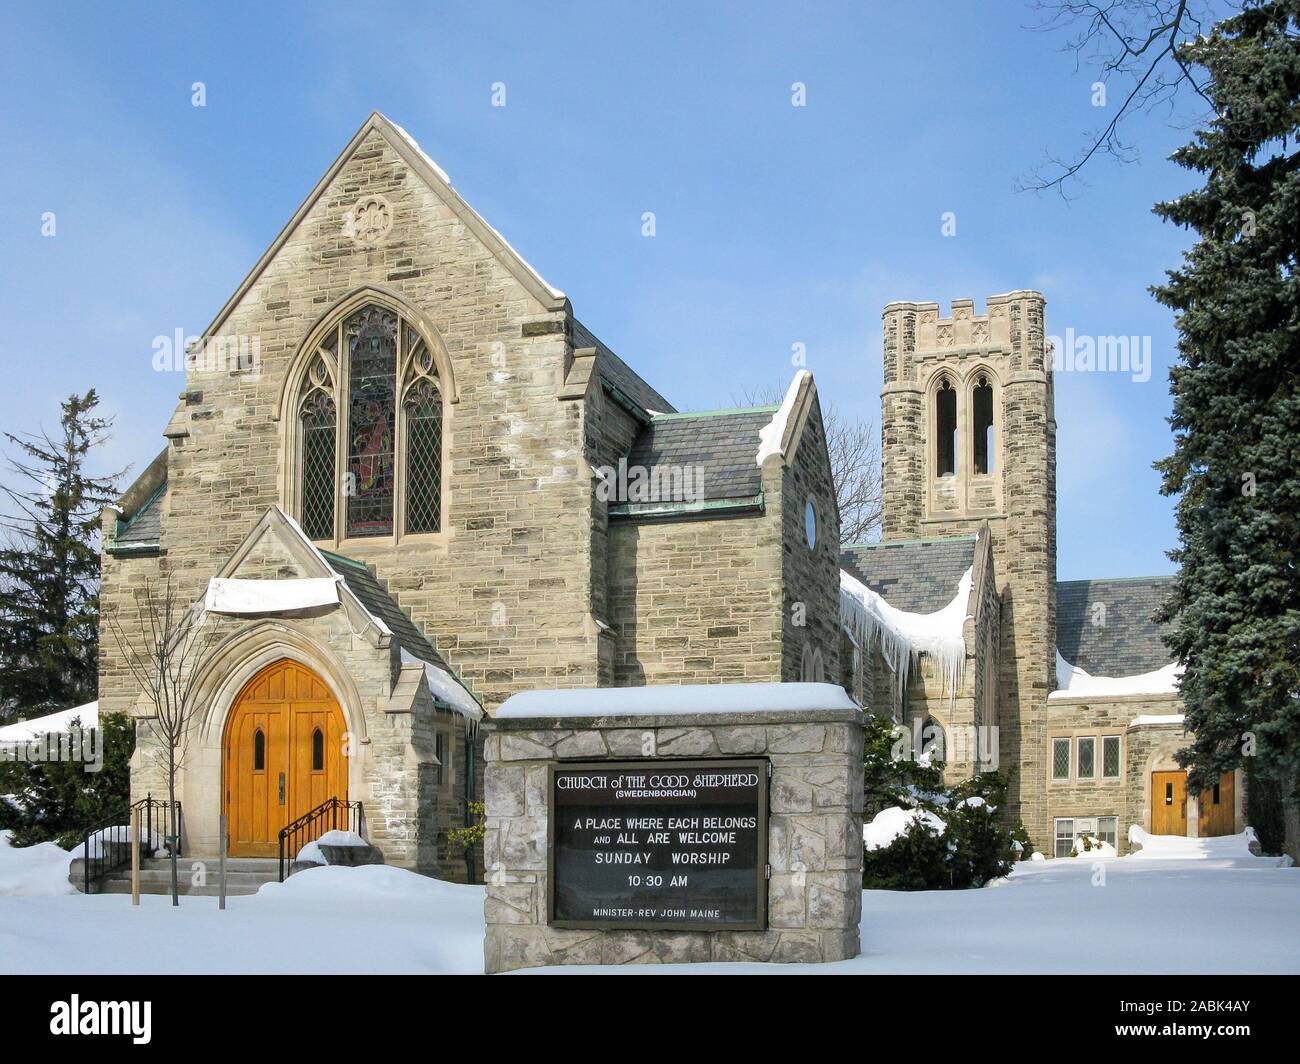 Swedenborgian Church of the Good Shepherd in the town of Kitchener, Ontario, Canada Stock Photo